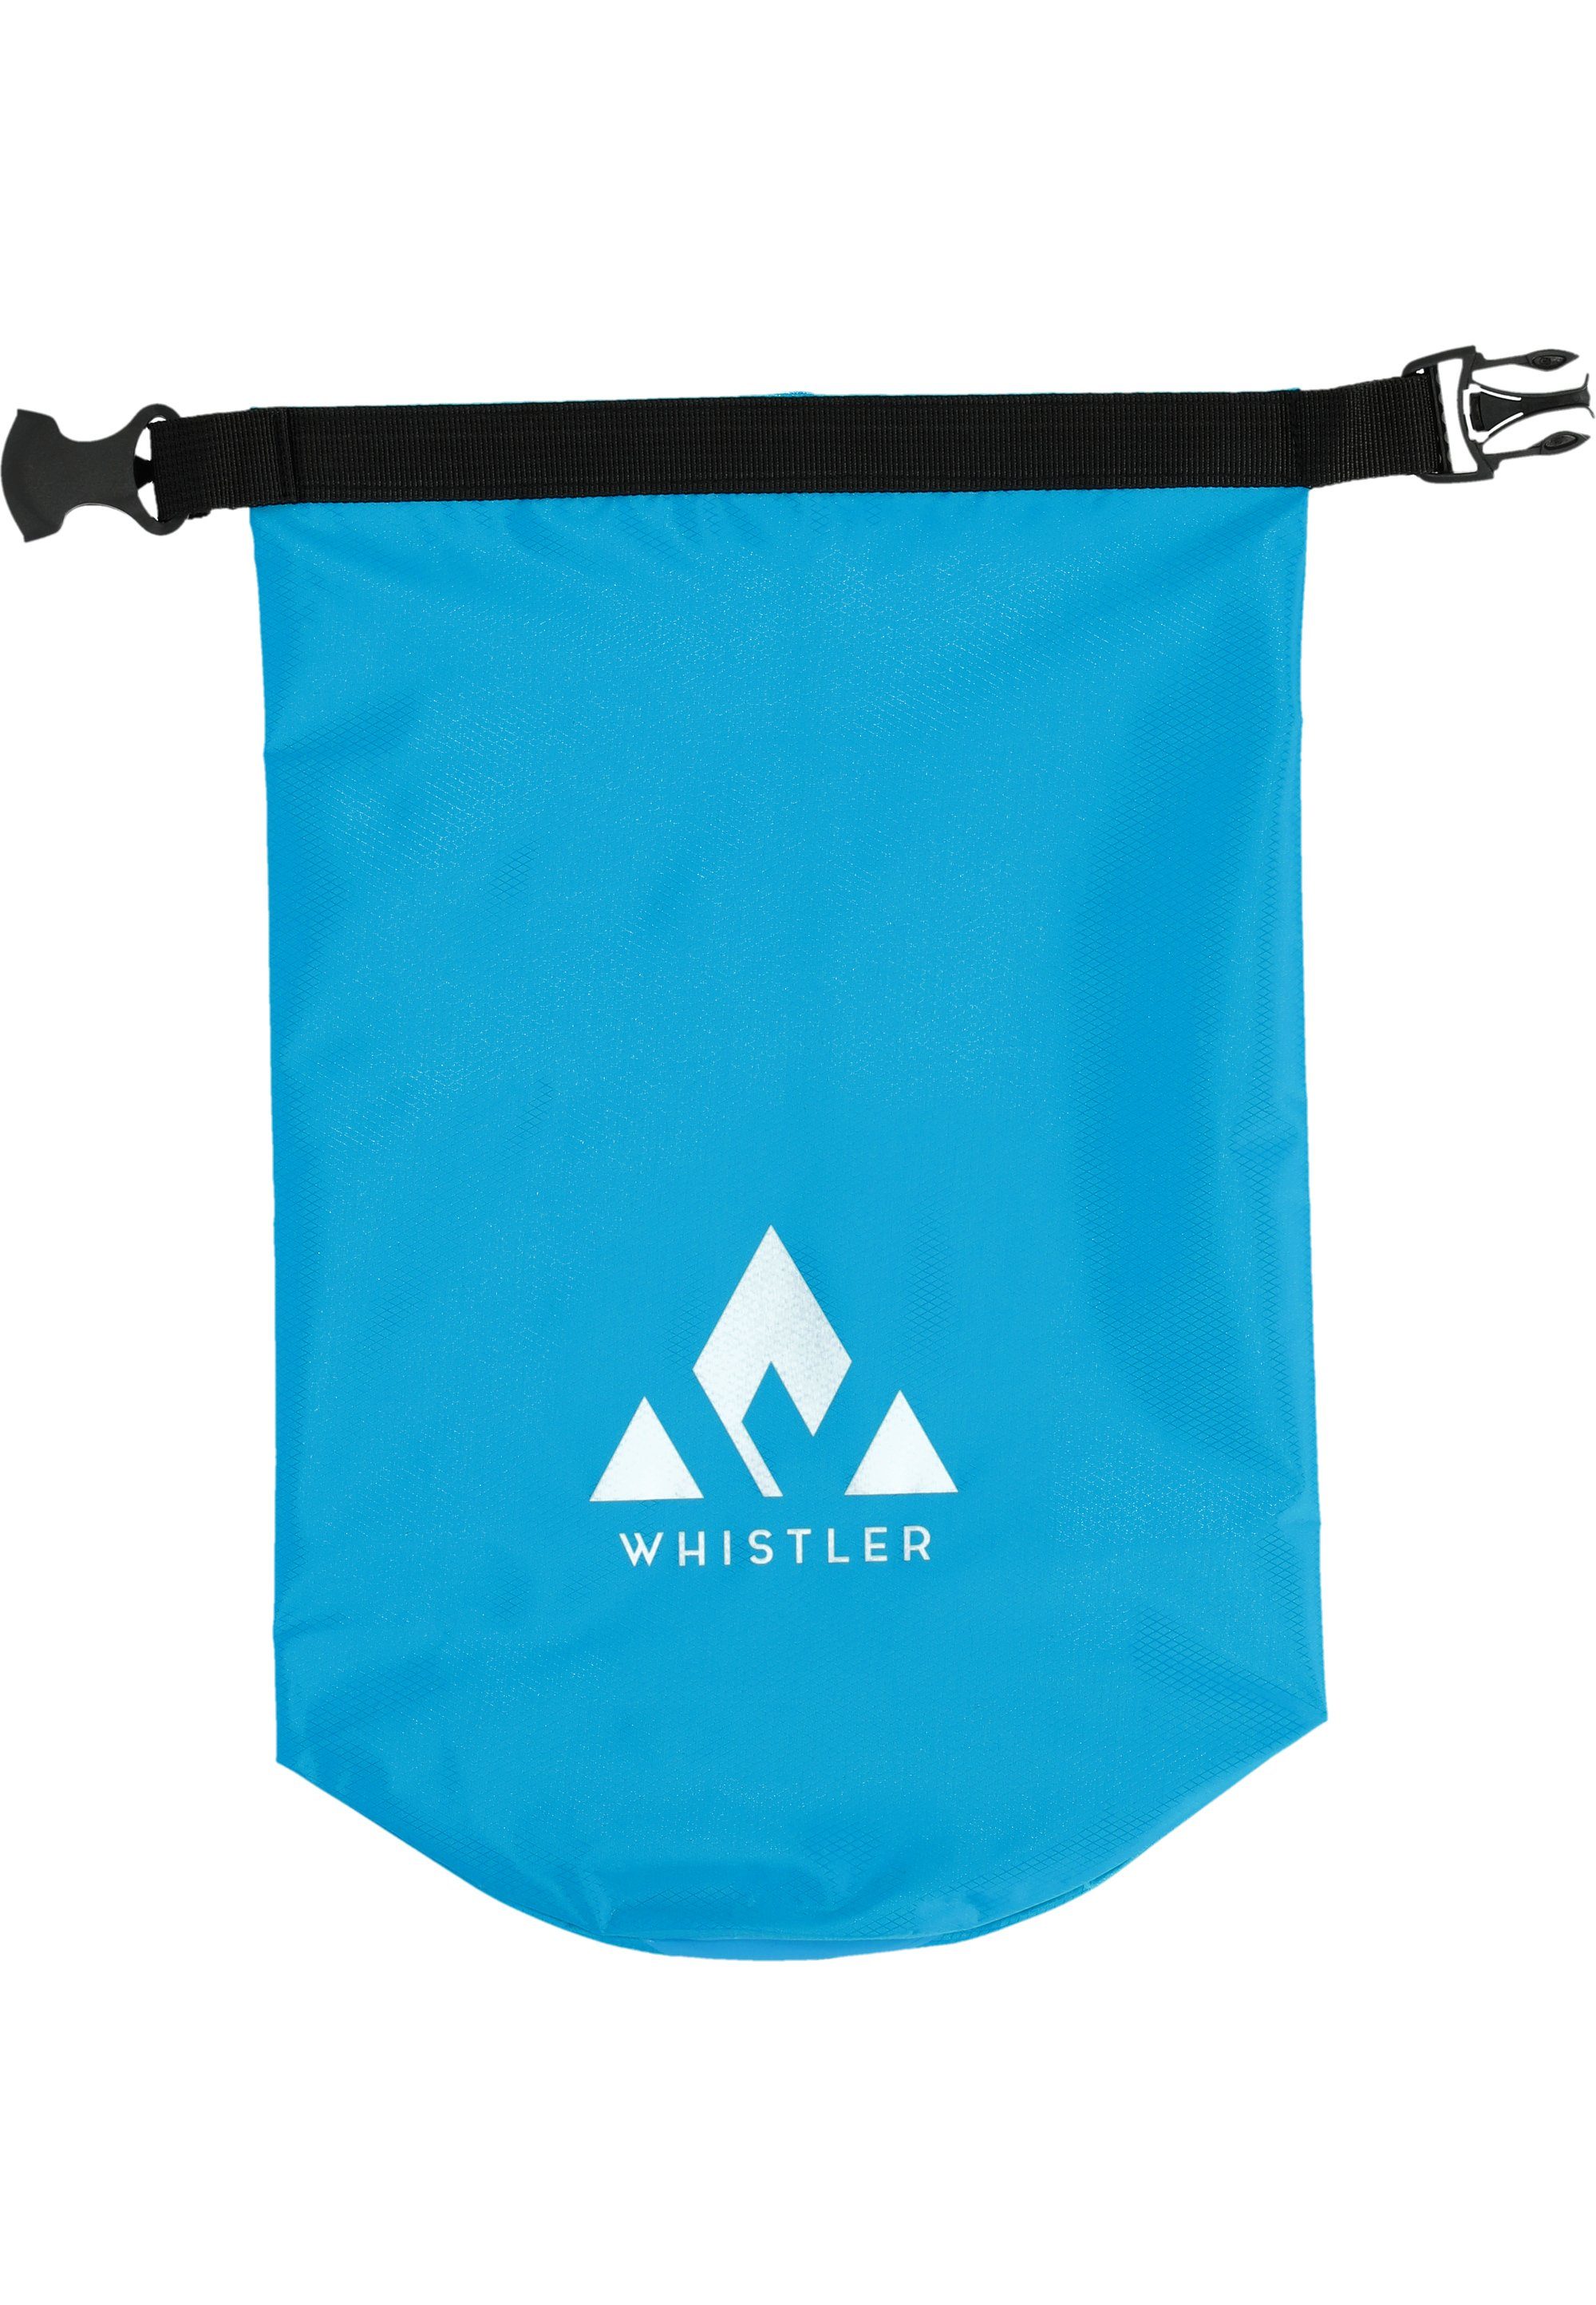 WHISTLER Drybag Tonto wasserdichtem Material aus 5L